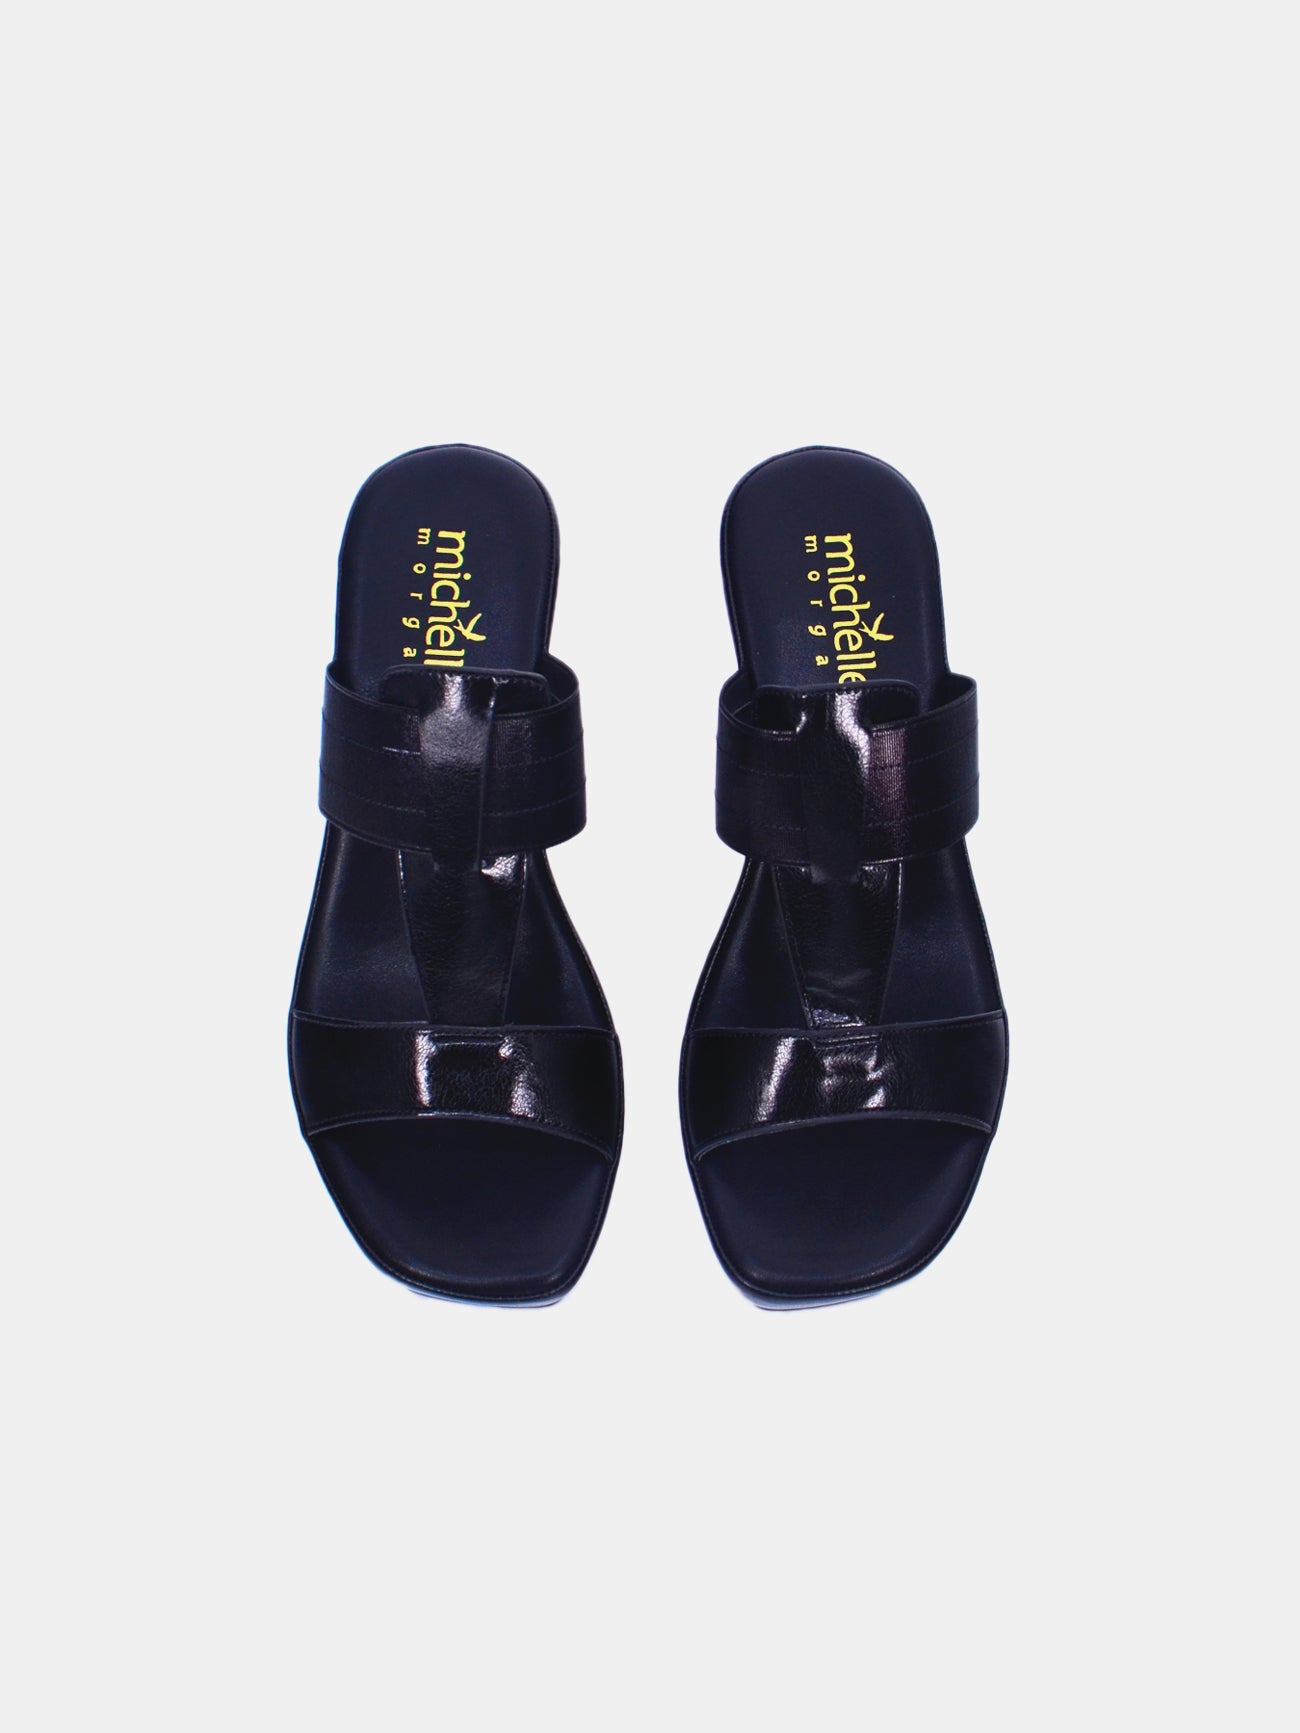 Michelle Morgan 314ZD128 Women's Heeled Sandals